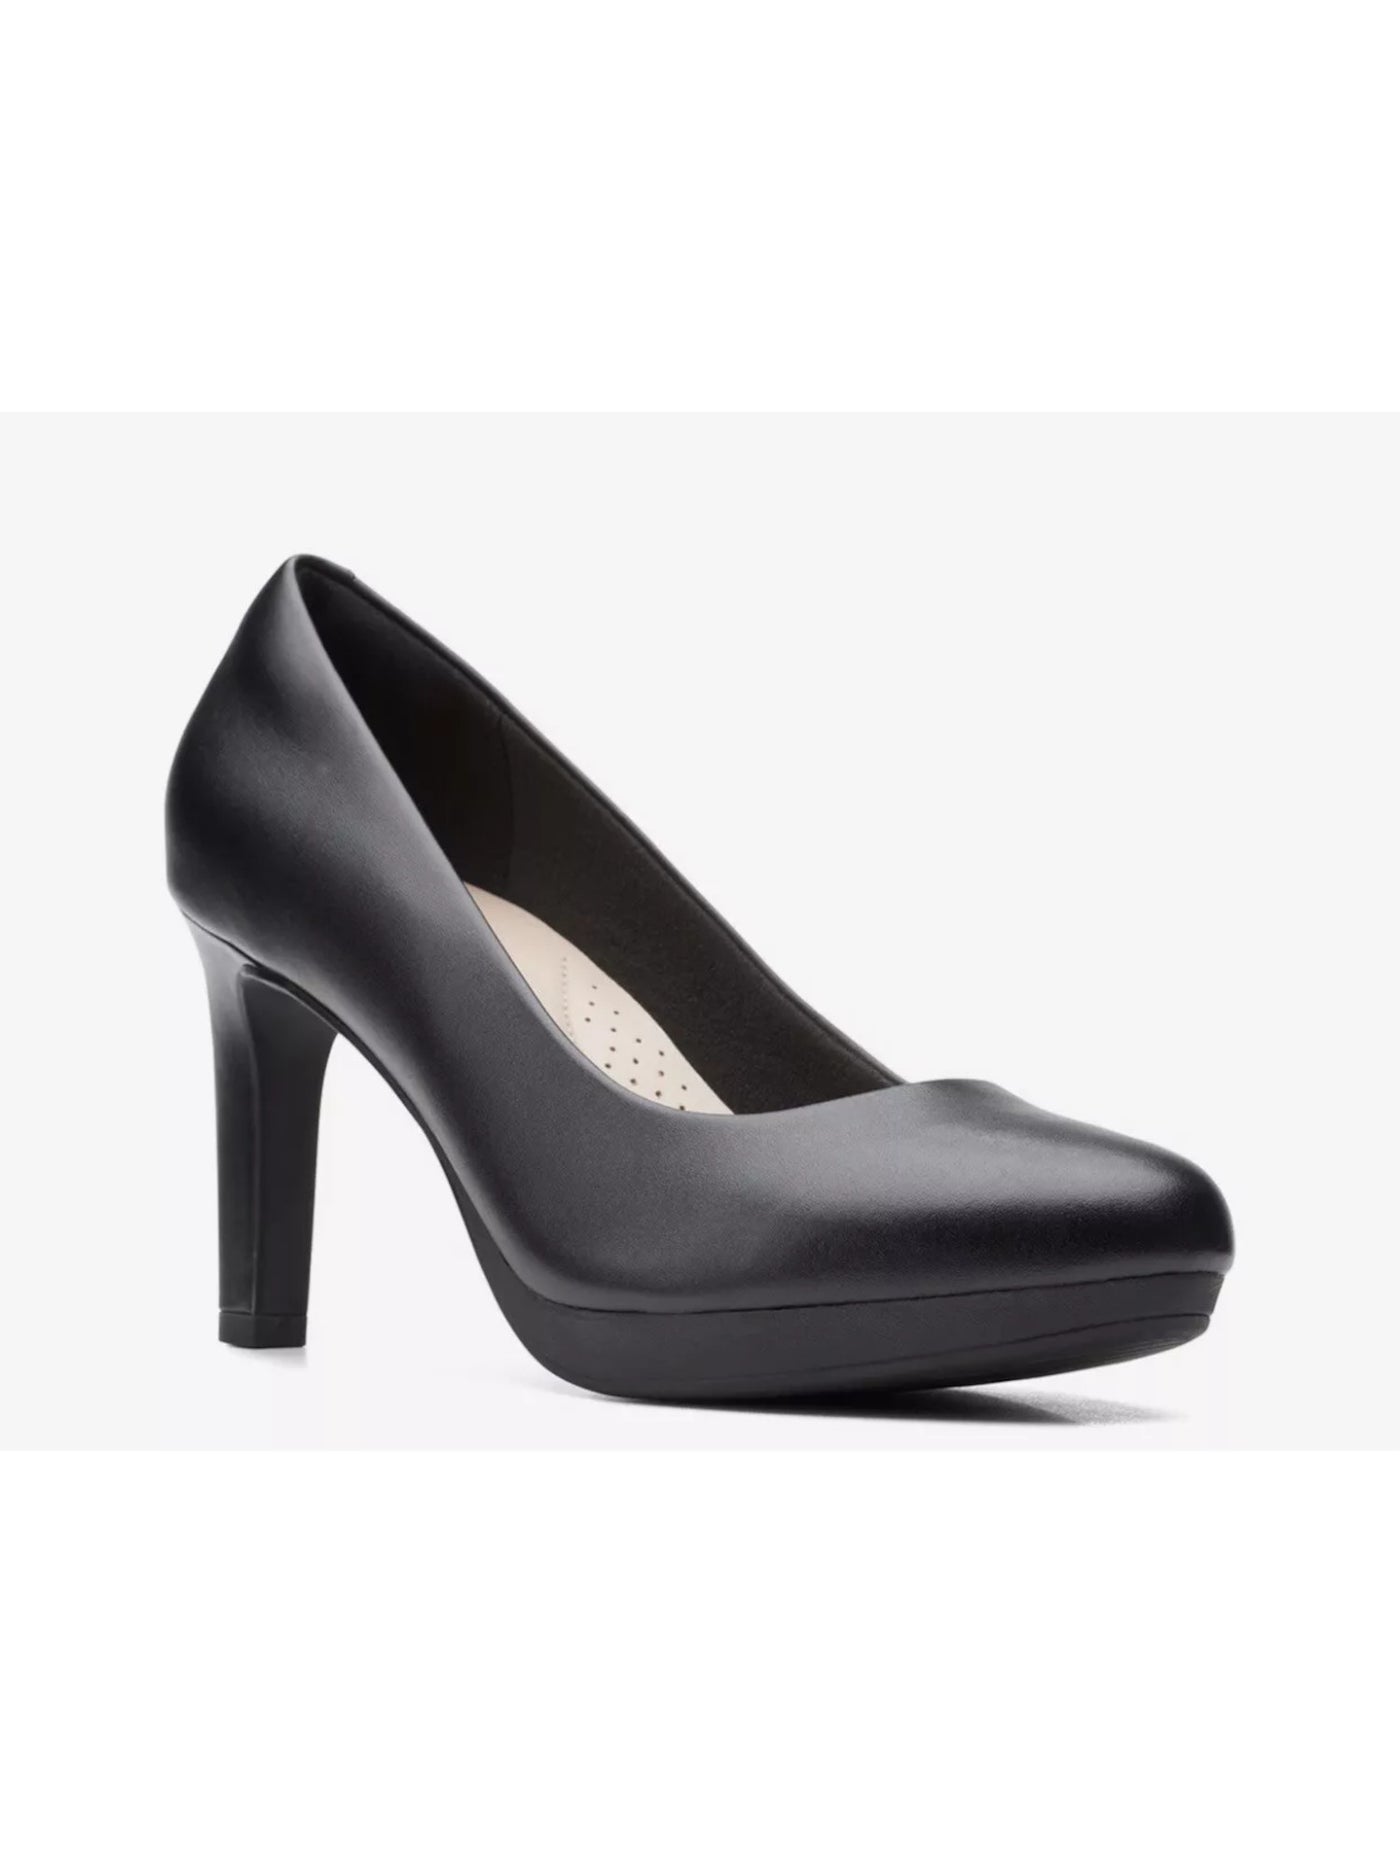 CLARKS COLLECTION Womens Black Padded Ambyr Joy Almond Toe Block Heel Slip On Leather Dress Pumps Shoes 6.5 W